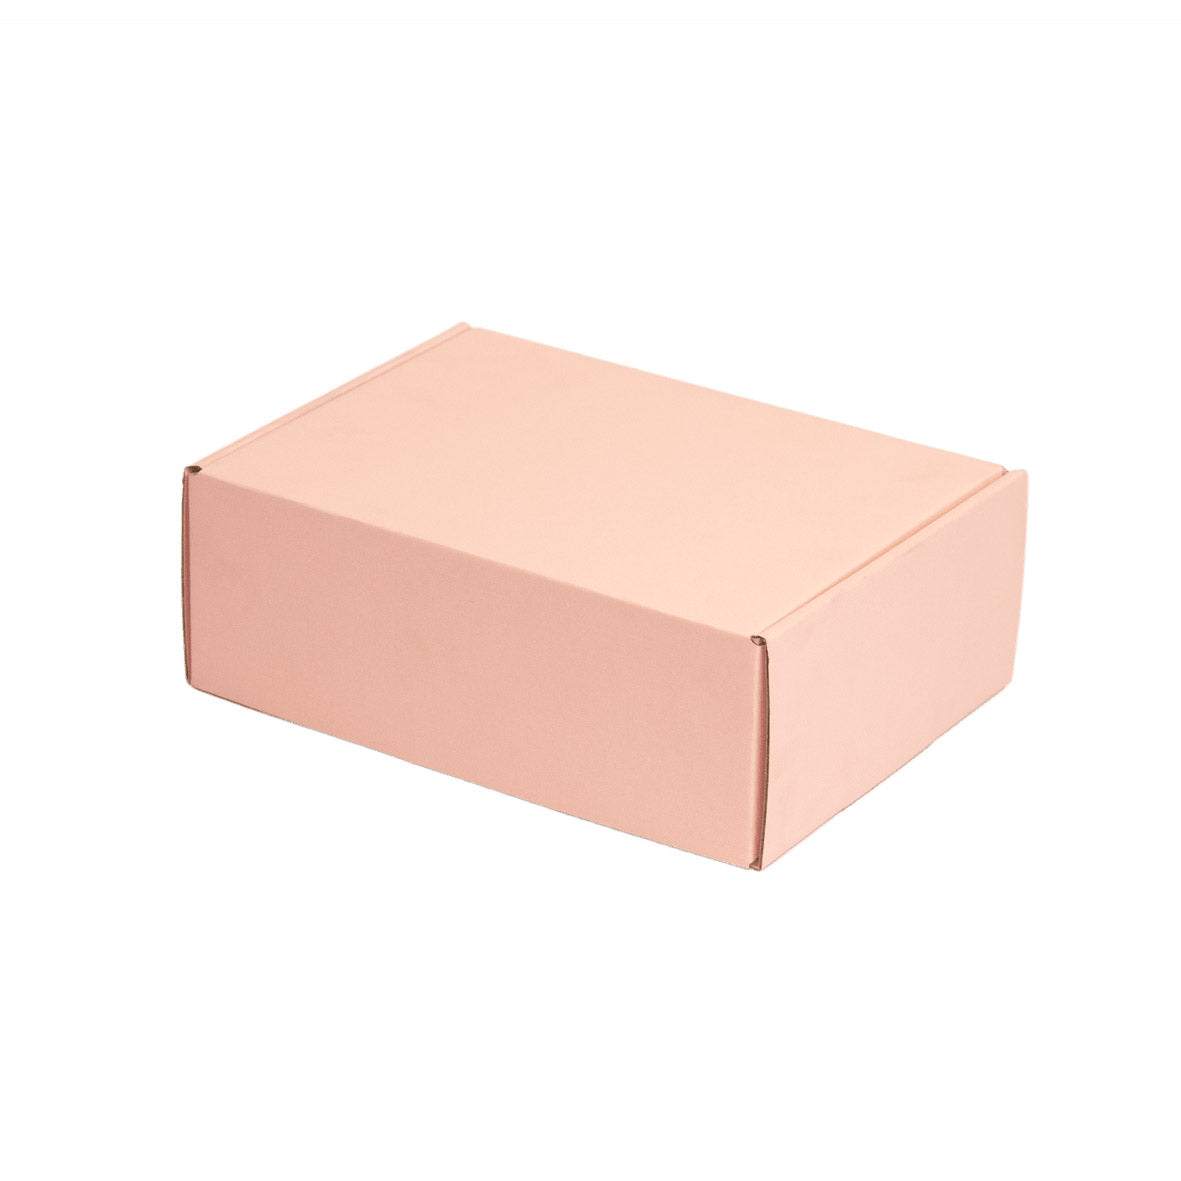 Full Rose Pink 310 x 230 x 105mm A4 Tuck Mailing Box B306